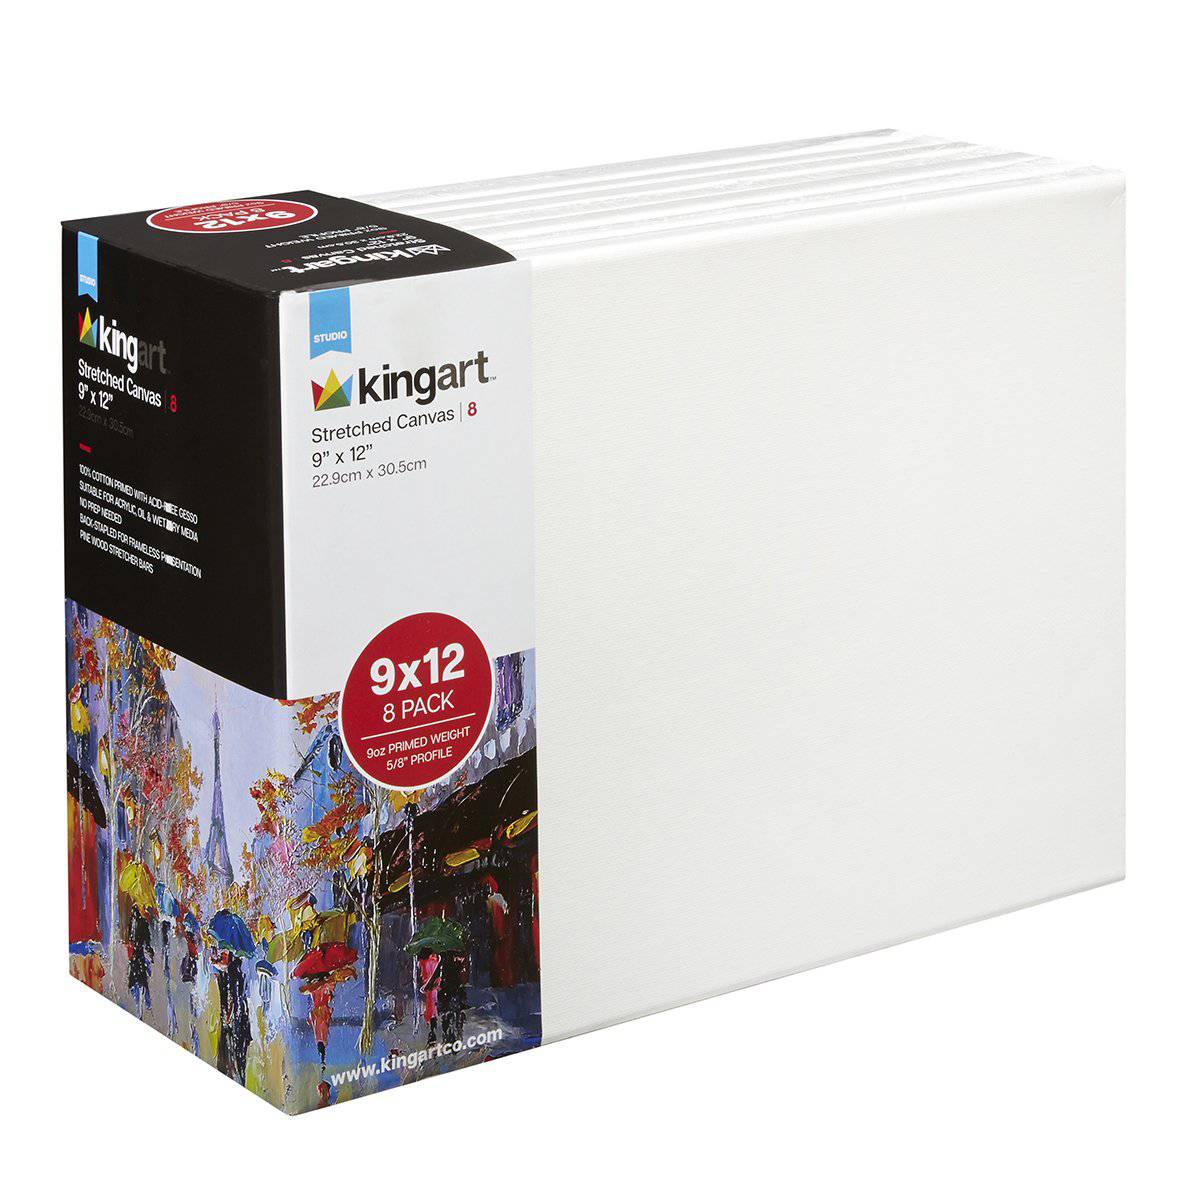 Kingart Canvas Panel 9 x 12 14 Pack